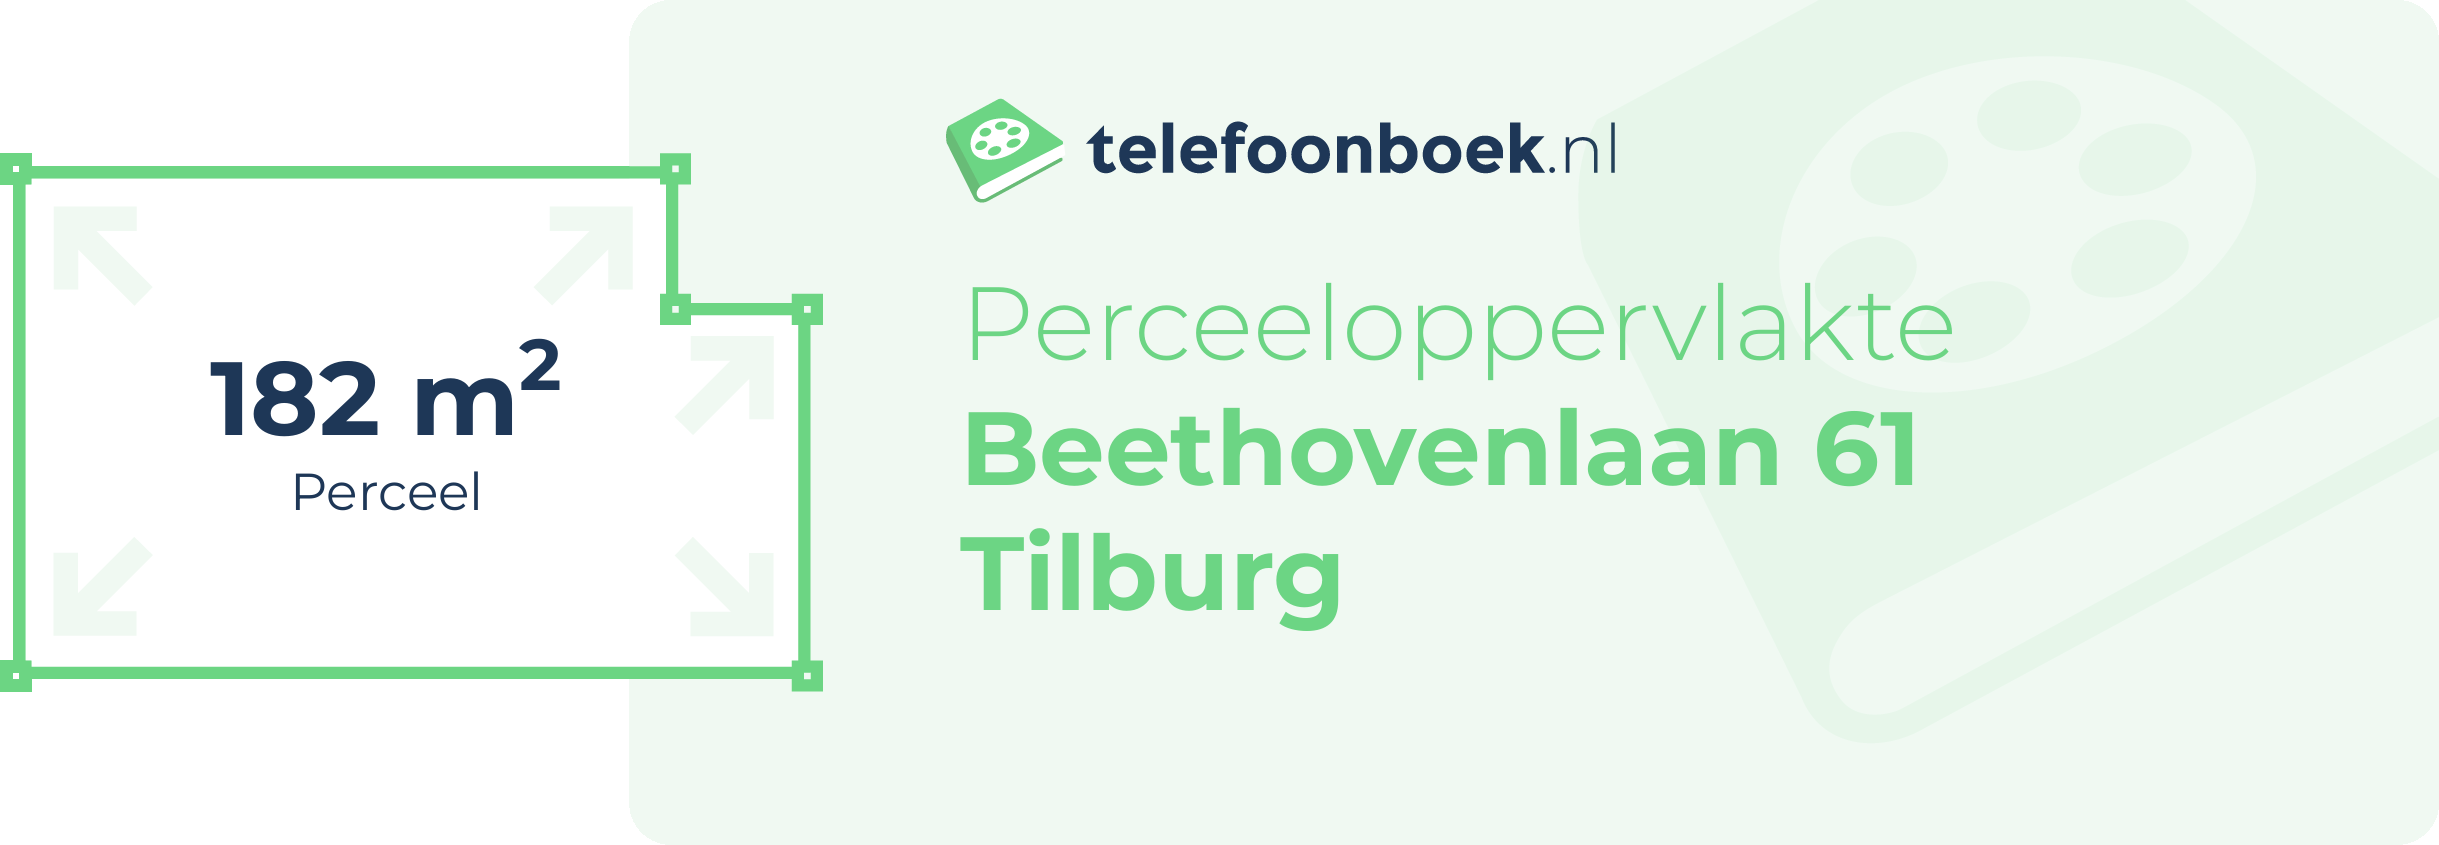 Perceeloppervlakte Beethovenlaan 61 Tilburg